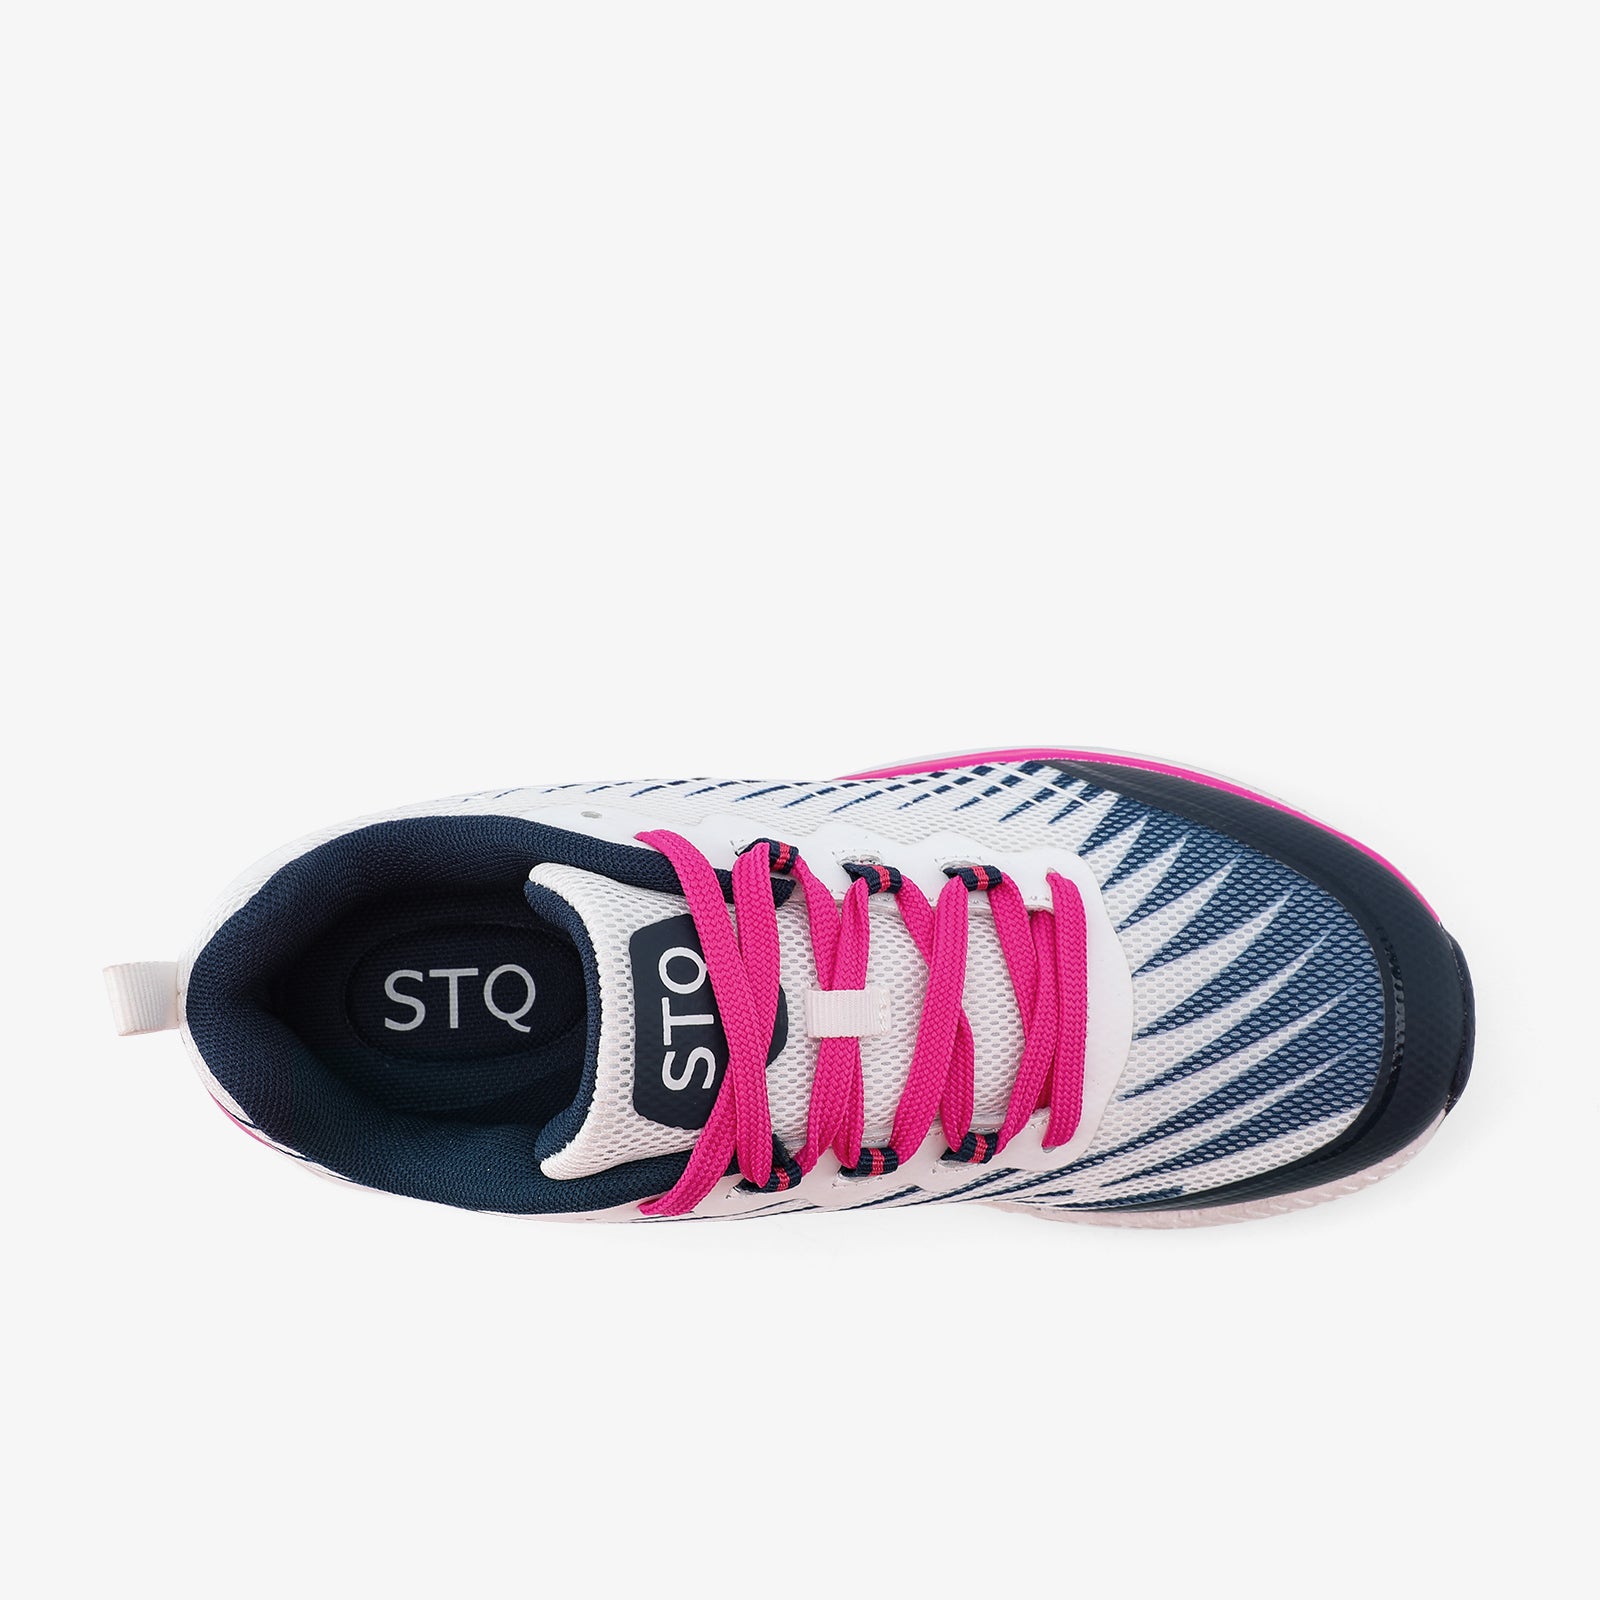 stq-shoes-fashion-sneakers-navy-white-rose-view